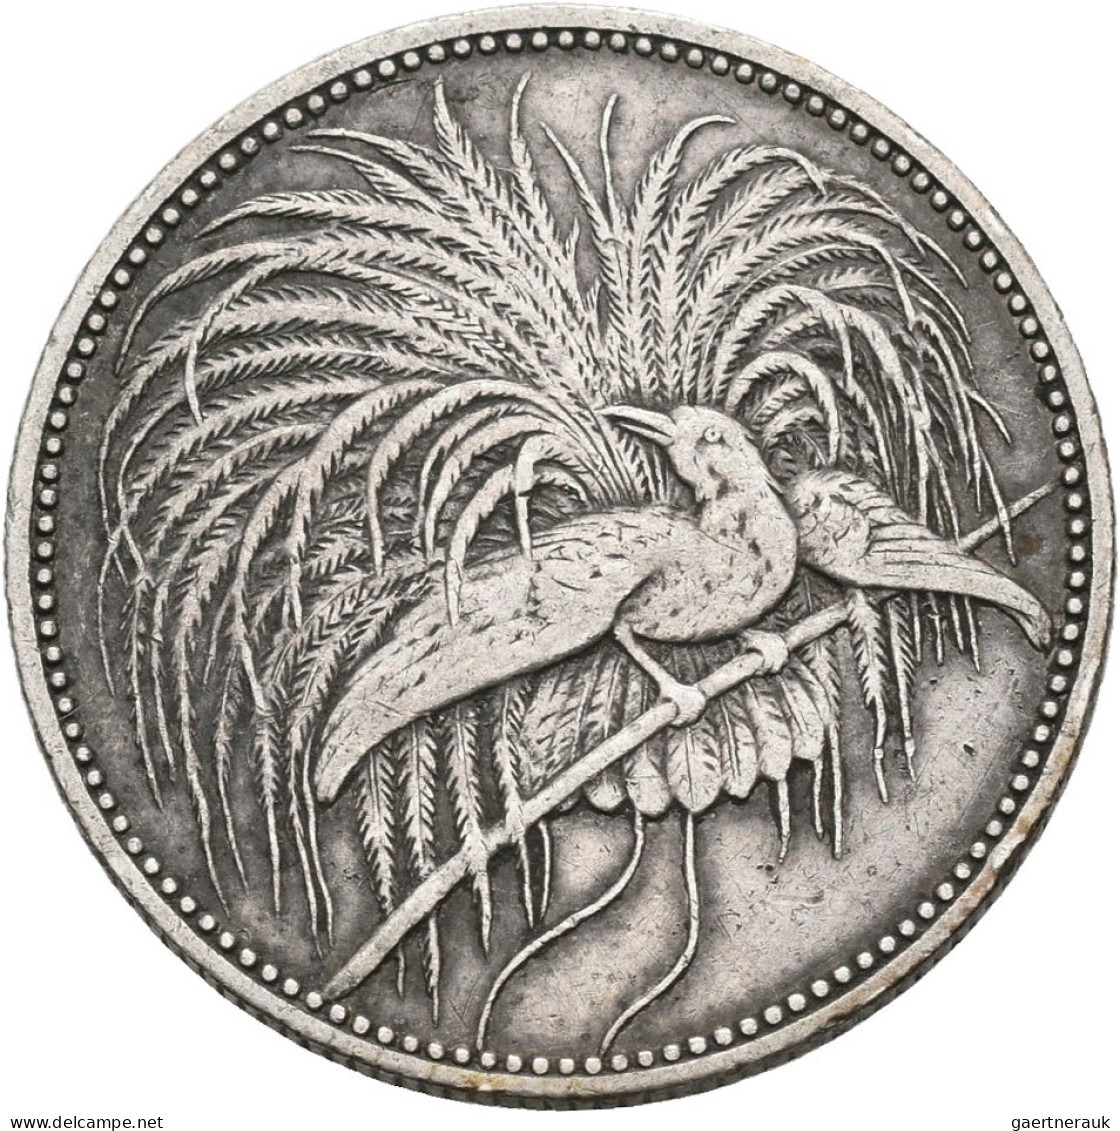 Deutsch-Neuguinea: 1 Neu-Guinea Mark 1894 A, Paradiesvogel, Jaeger N705, Winzige - Nouvelle Guinée Allemande